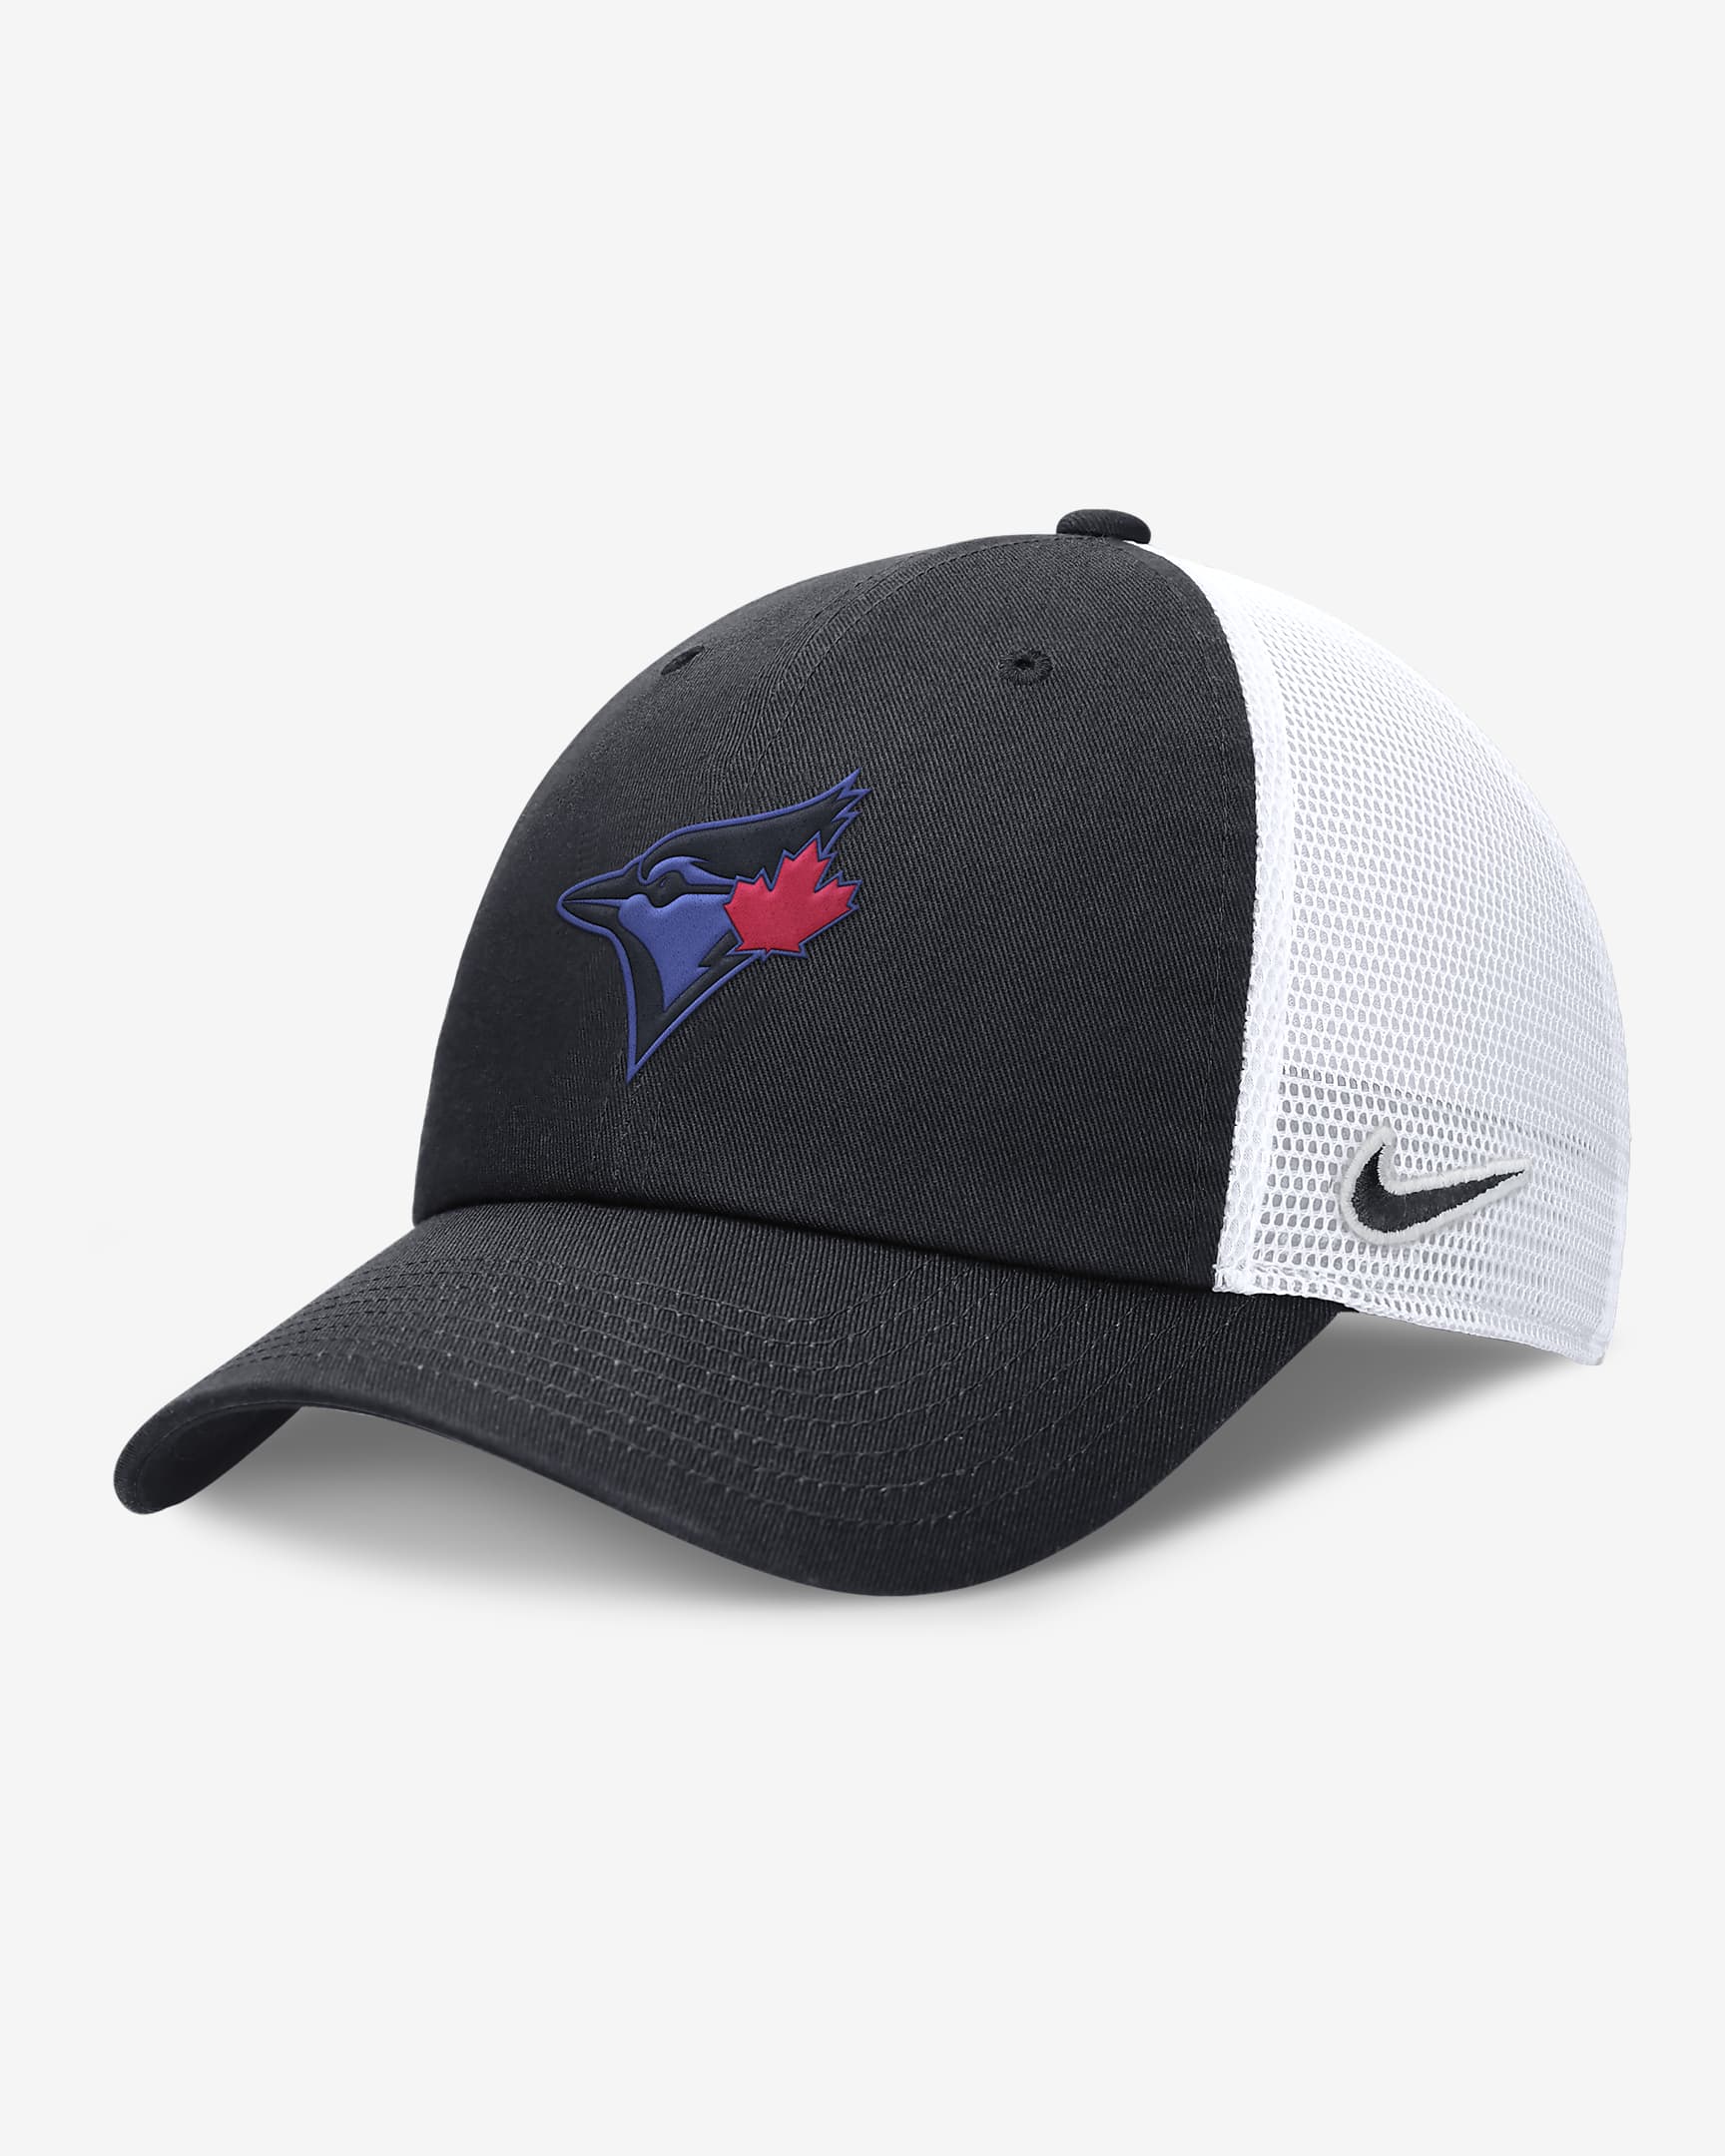 Gorra de rejilla Nike de la MLB ajustable para hombre Toronto Blue Jays ...